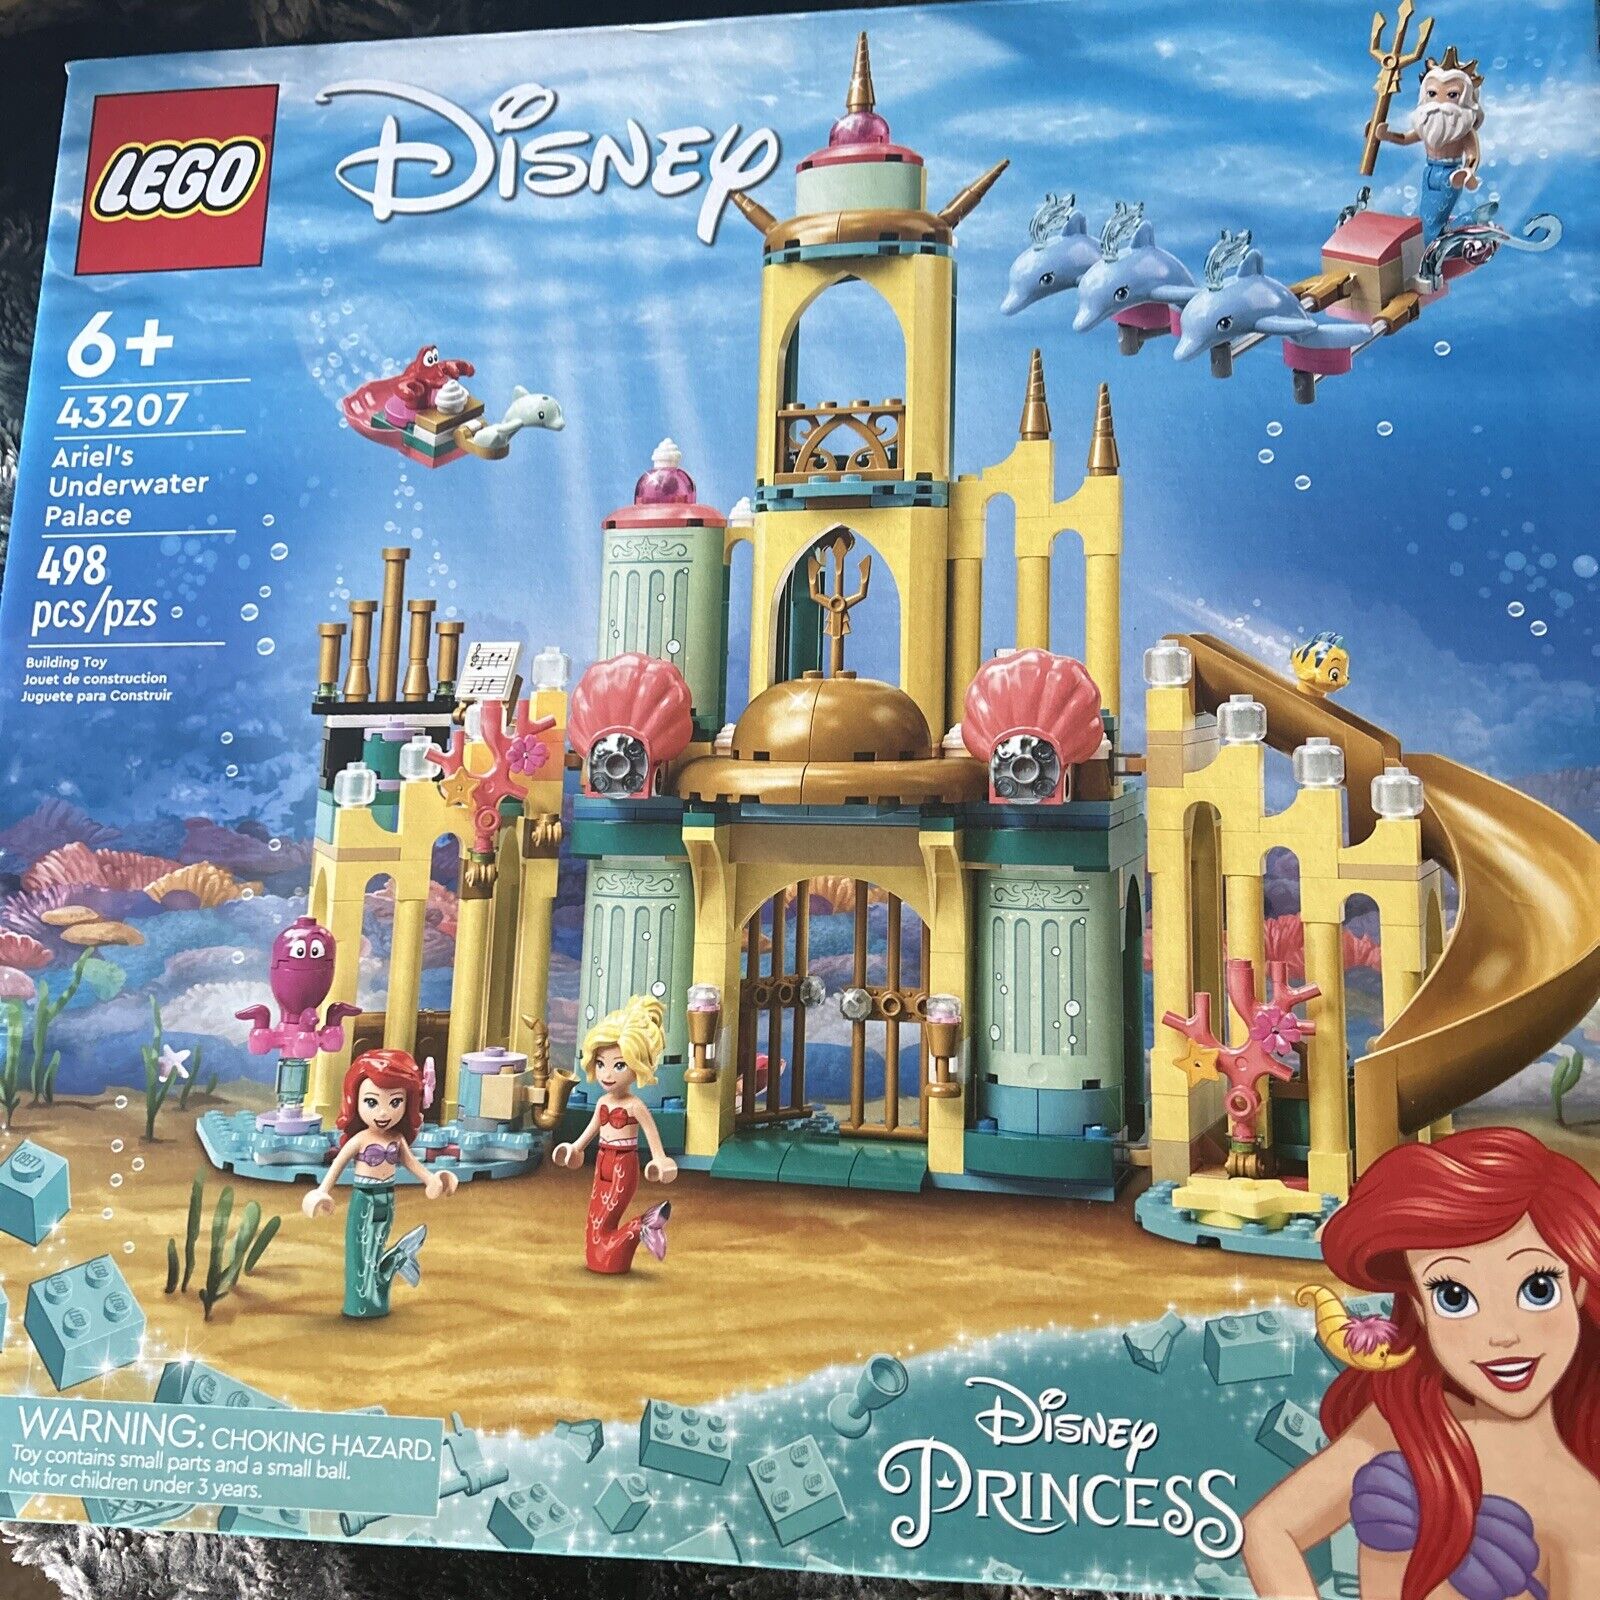 LEGO Disney Princess: Ariel's Underwater Palace (43207)